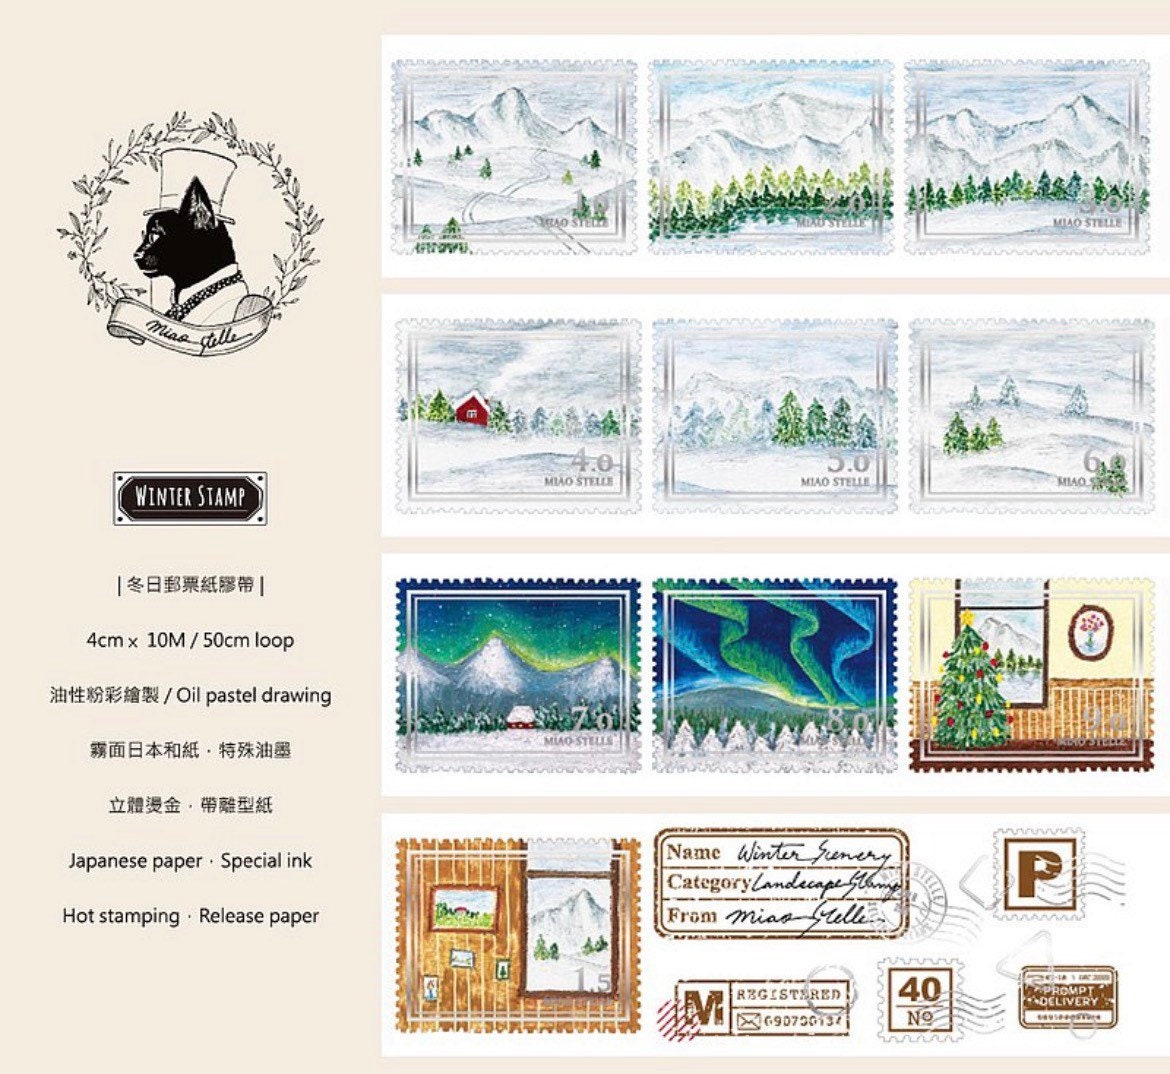 MiaoStelle Washitape "Winter Stamp"